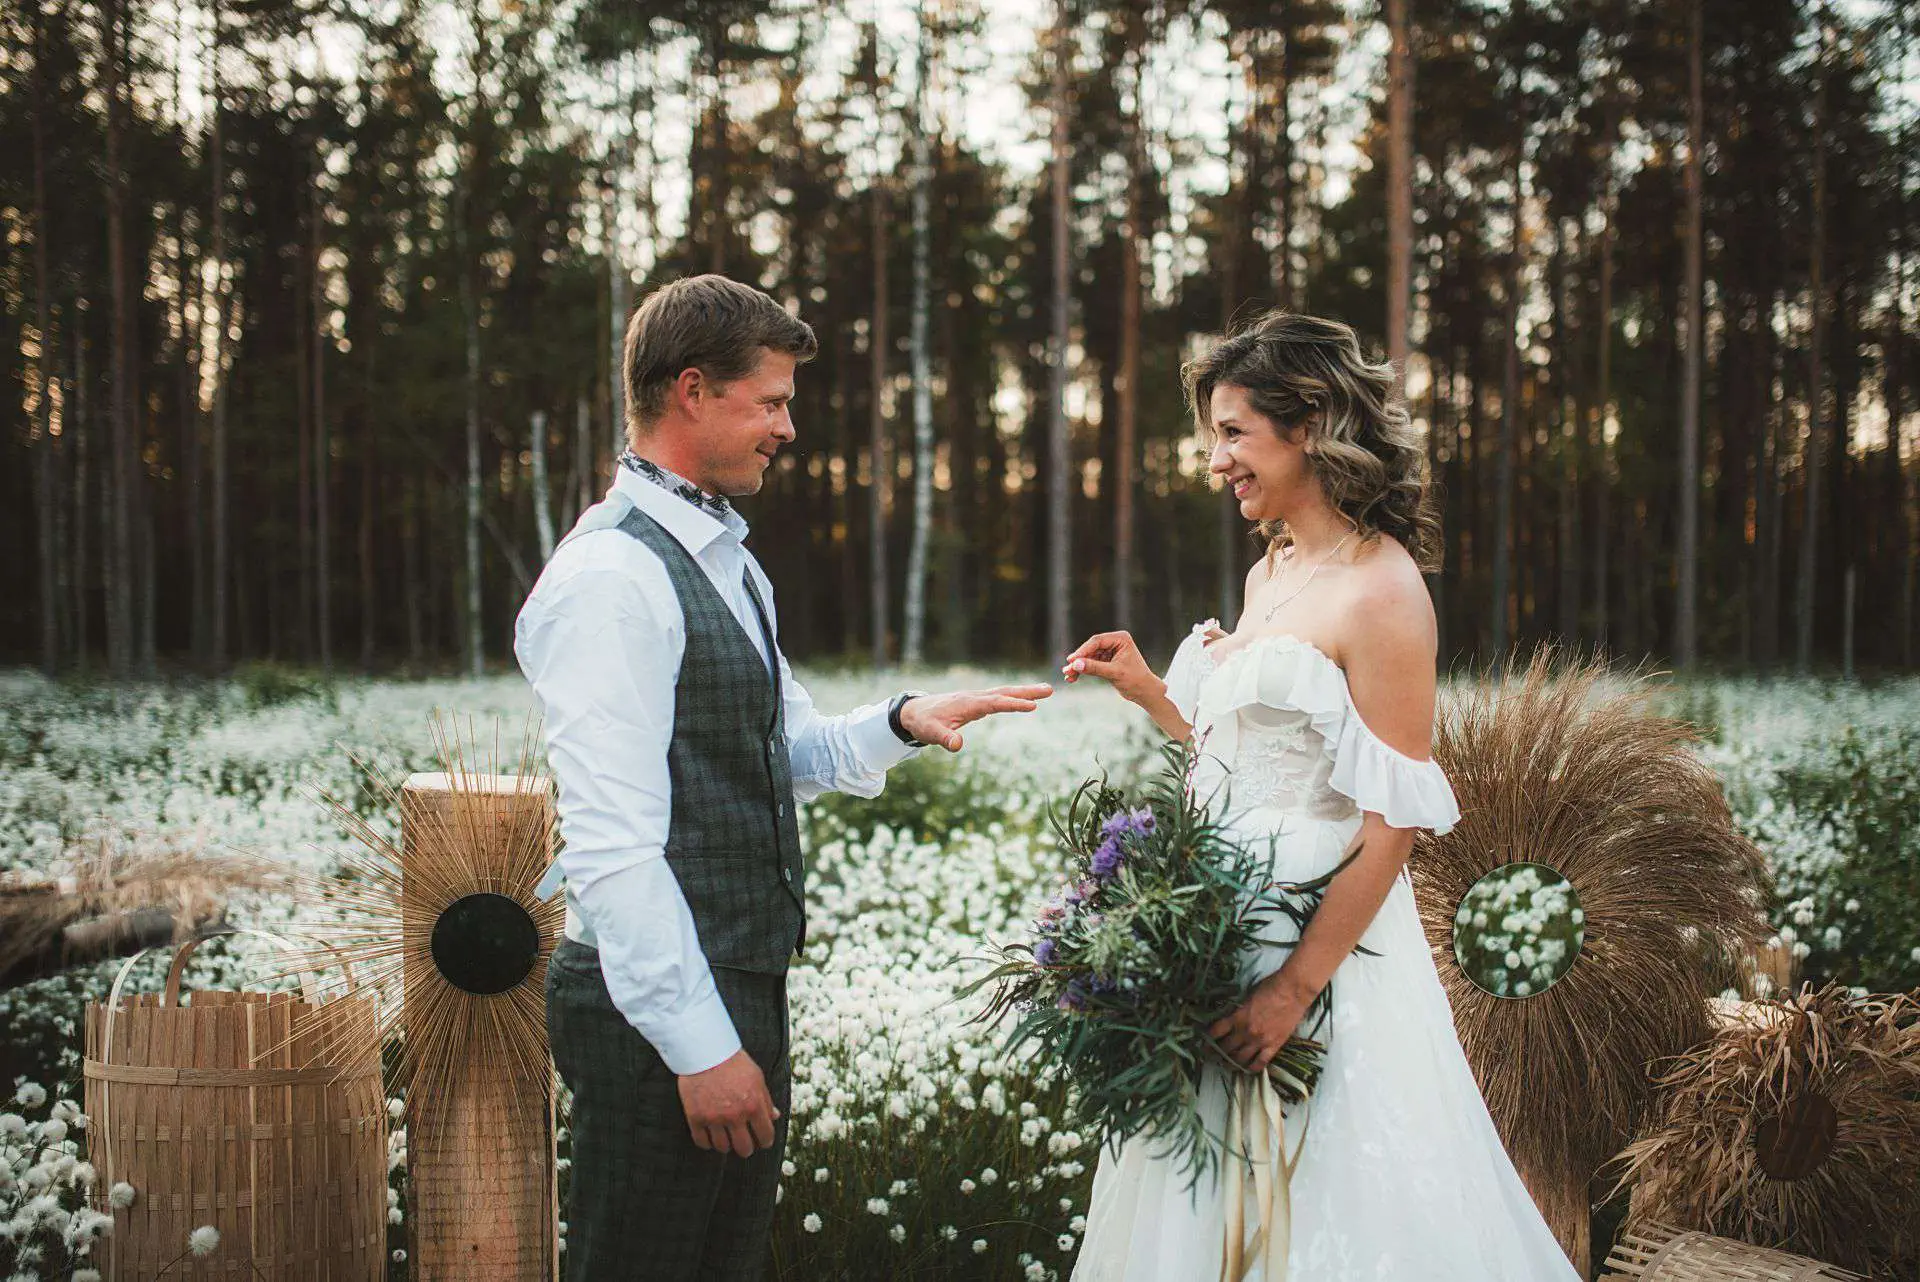 Foto: BUCIS PHOTOGRAPHY / Rīkotājs: <a href="https://ligavam.lv/profils/you-wedding-agency/">YOU WEDDING AGENCY</a>